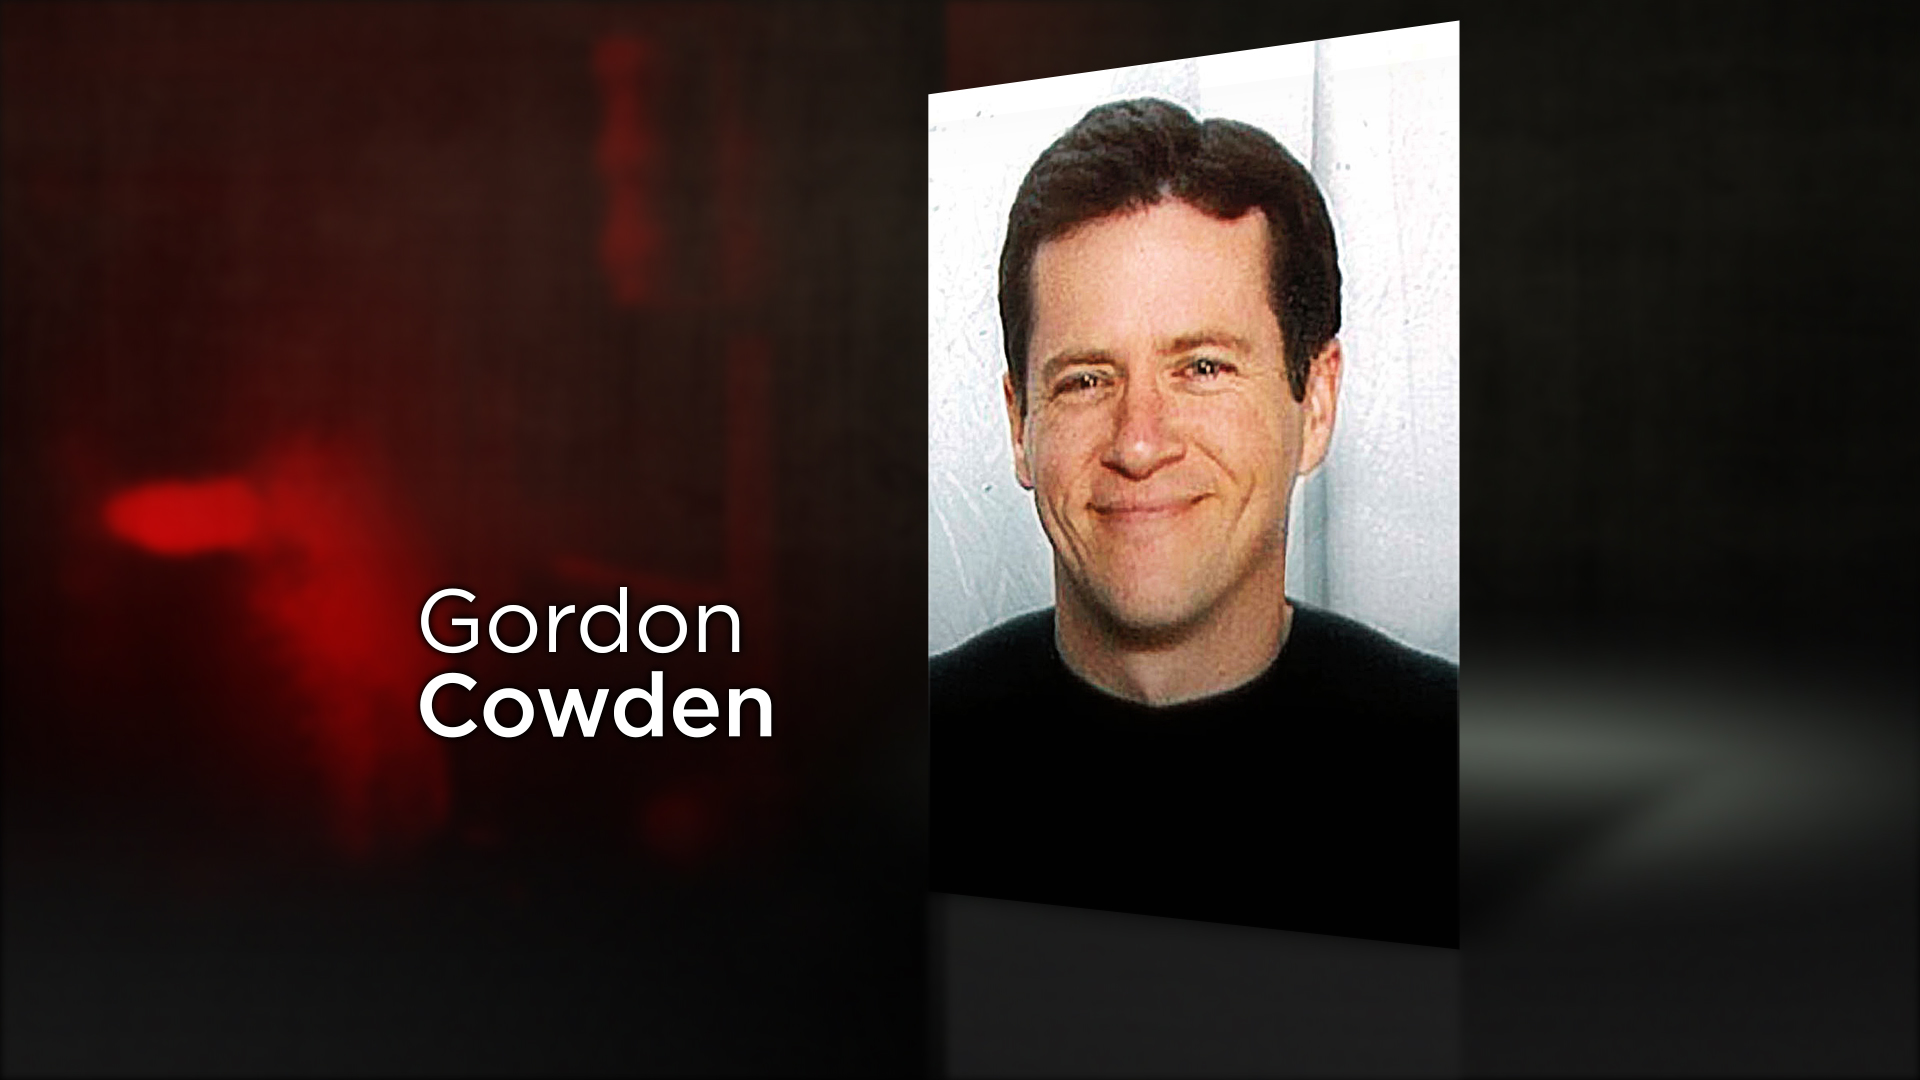 Gordon W. Cowden, 51